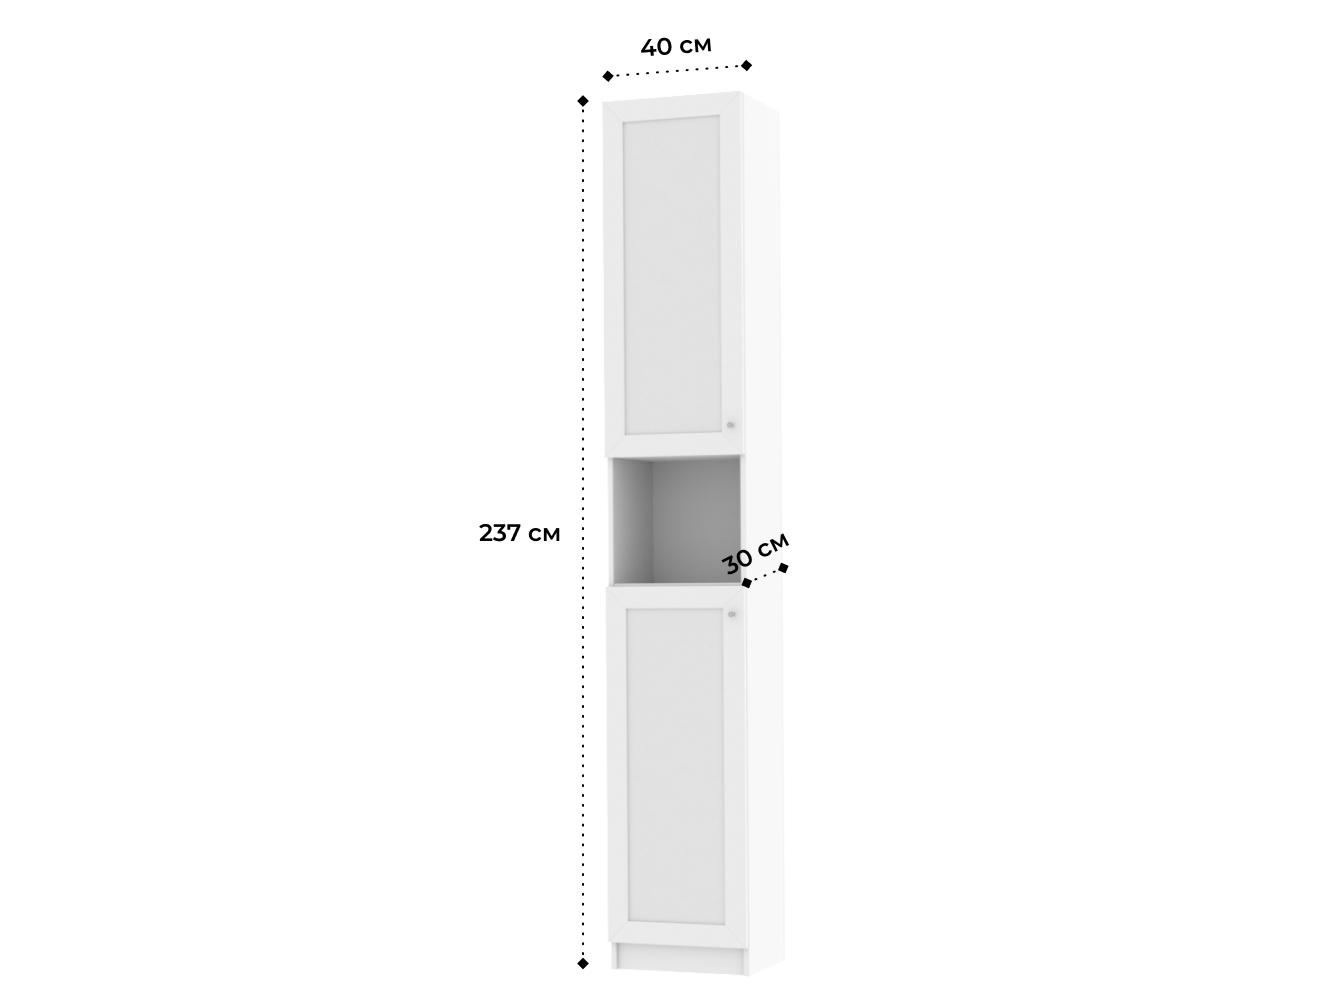 Книжный шкаф Билли 378 white ИКЕА (IKEA) изображение товара